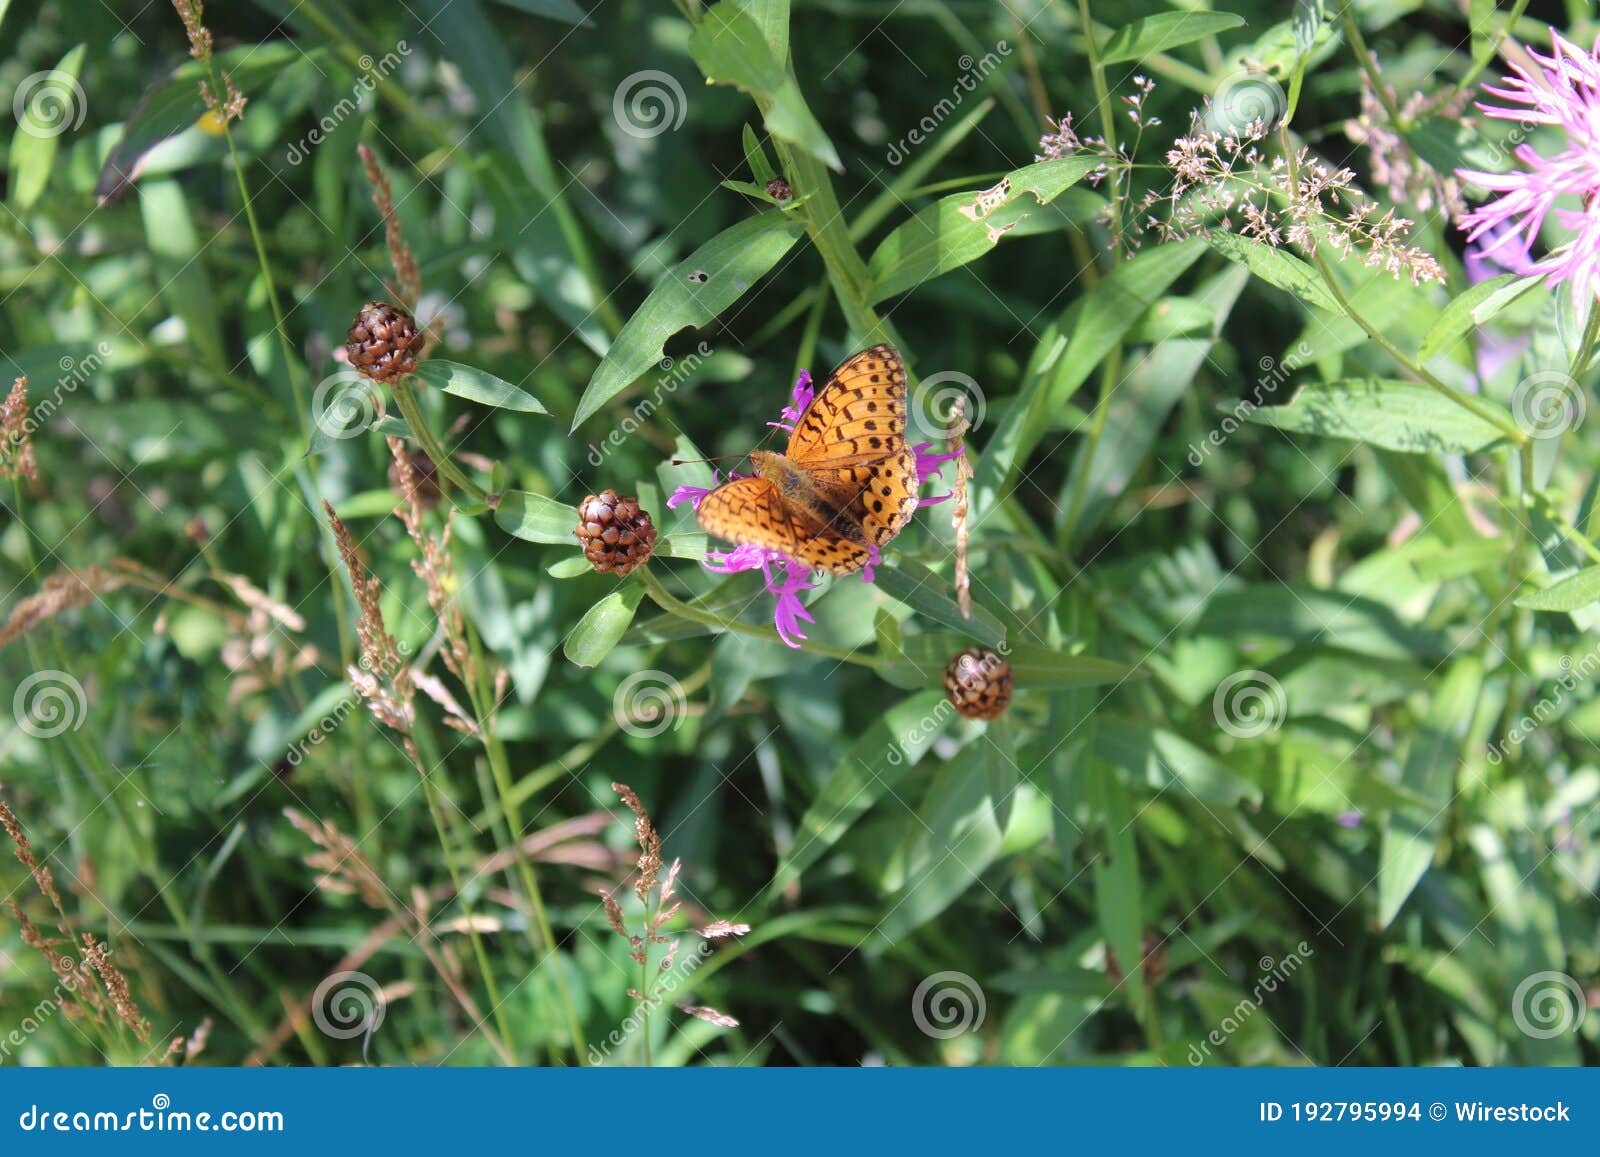 butterfly resting on the flower in lac de l'entonnoir near the bouverans, france